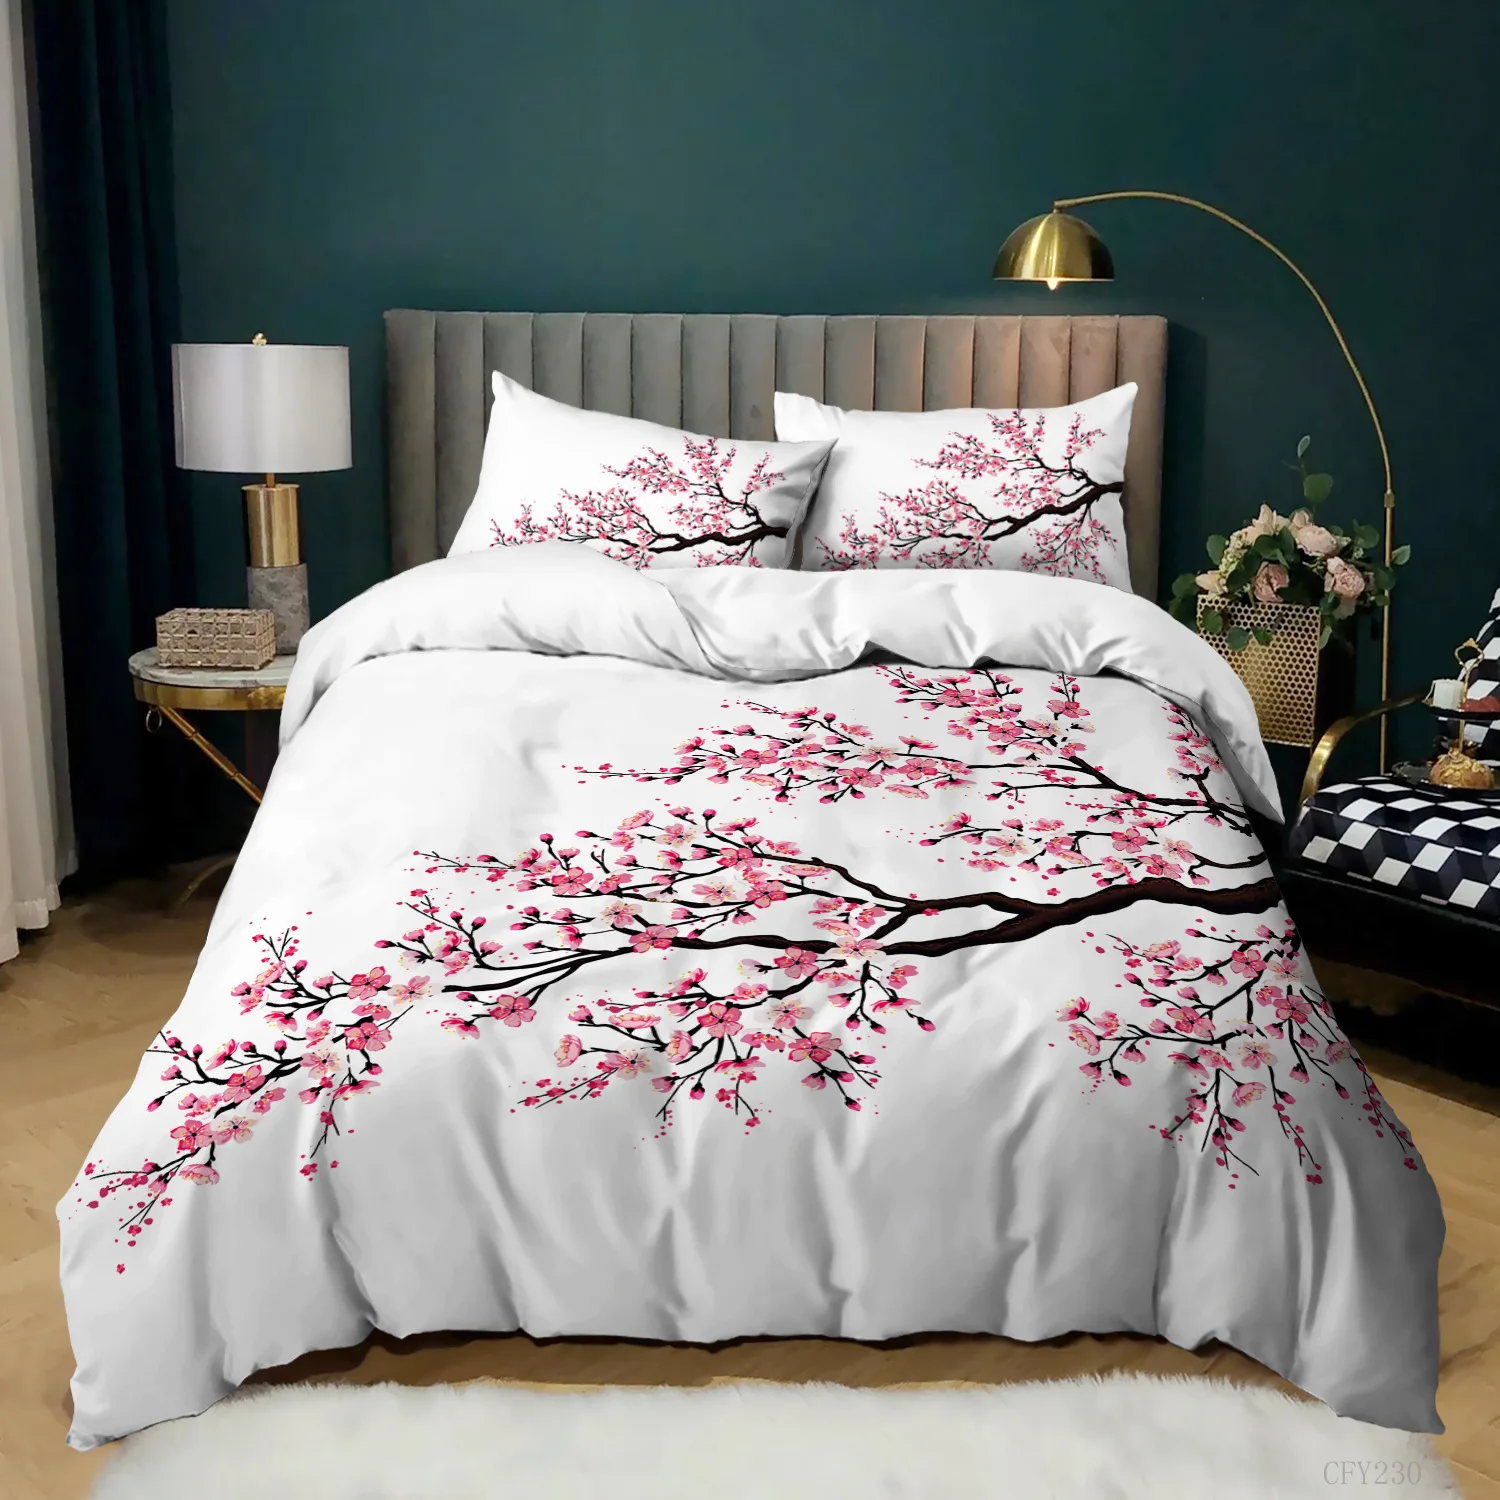 

Plum Blossom Bedding Set Red Flower Floral Comforter Cover for Kids Girls Teens Women,Japanese Ink Style Duvet Cover King Size